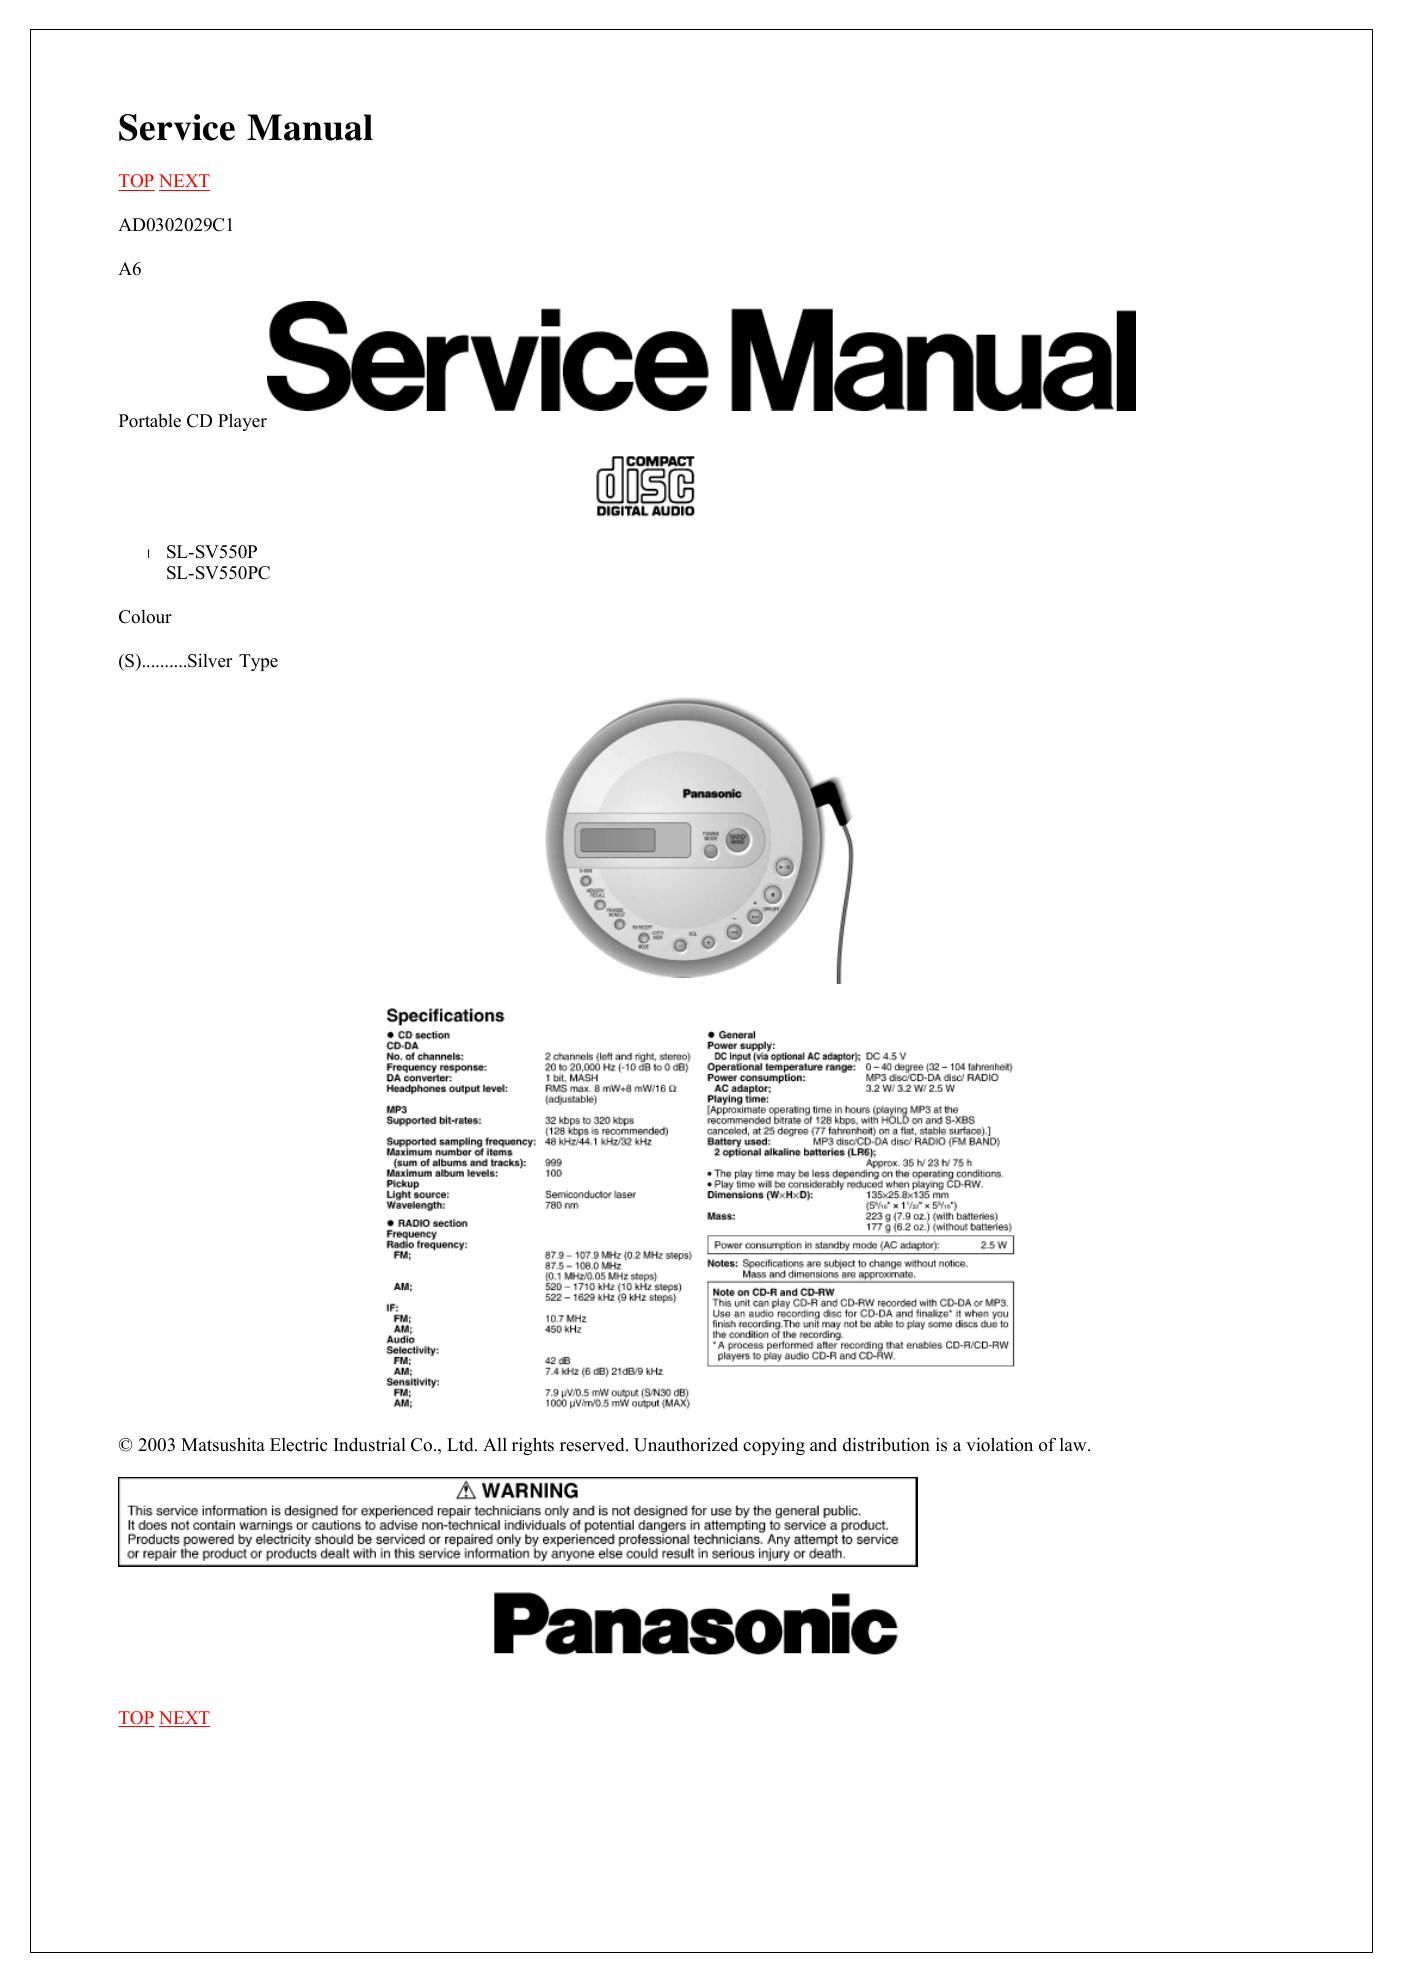 panasonic sl sv 550 service manual